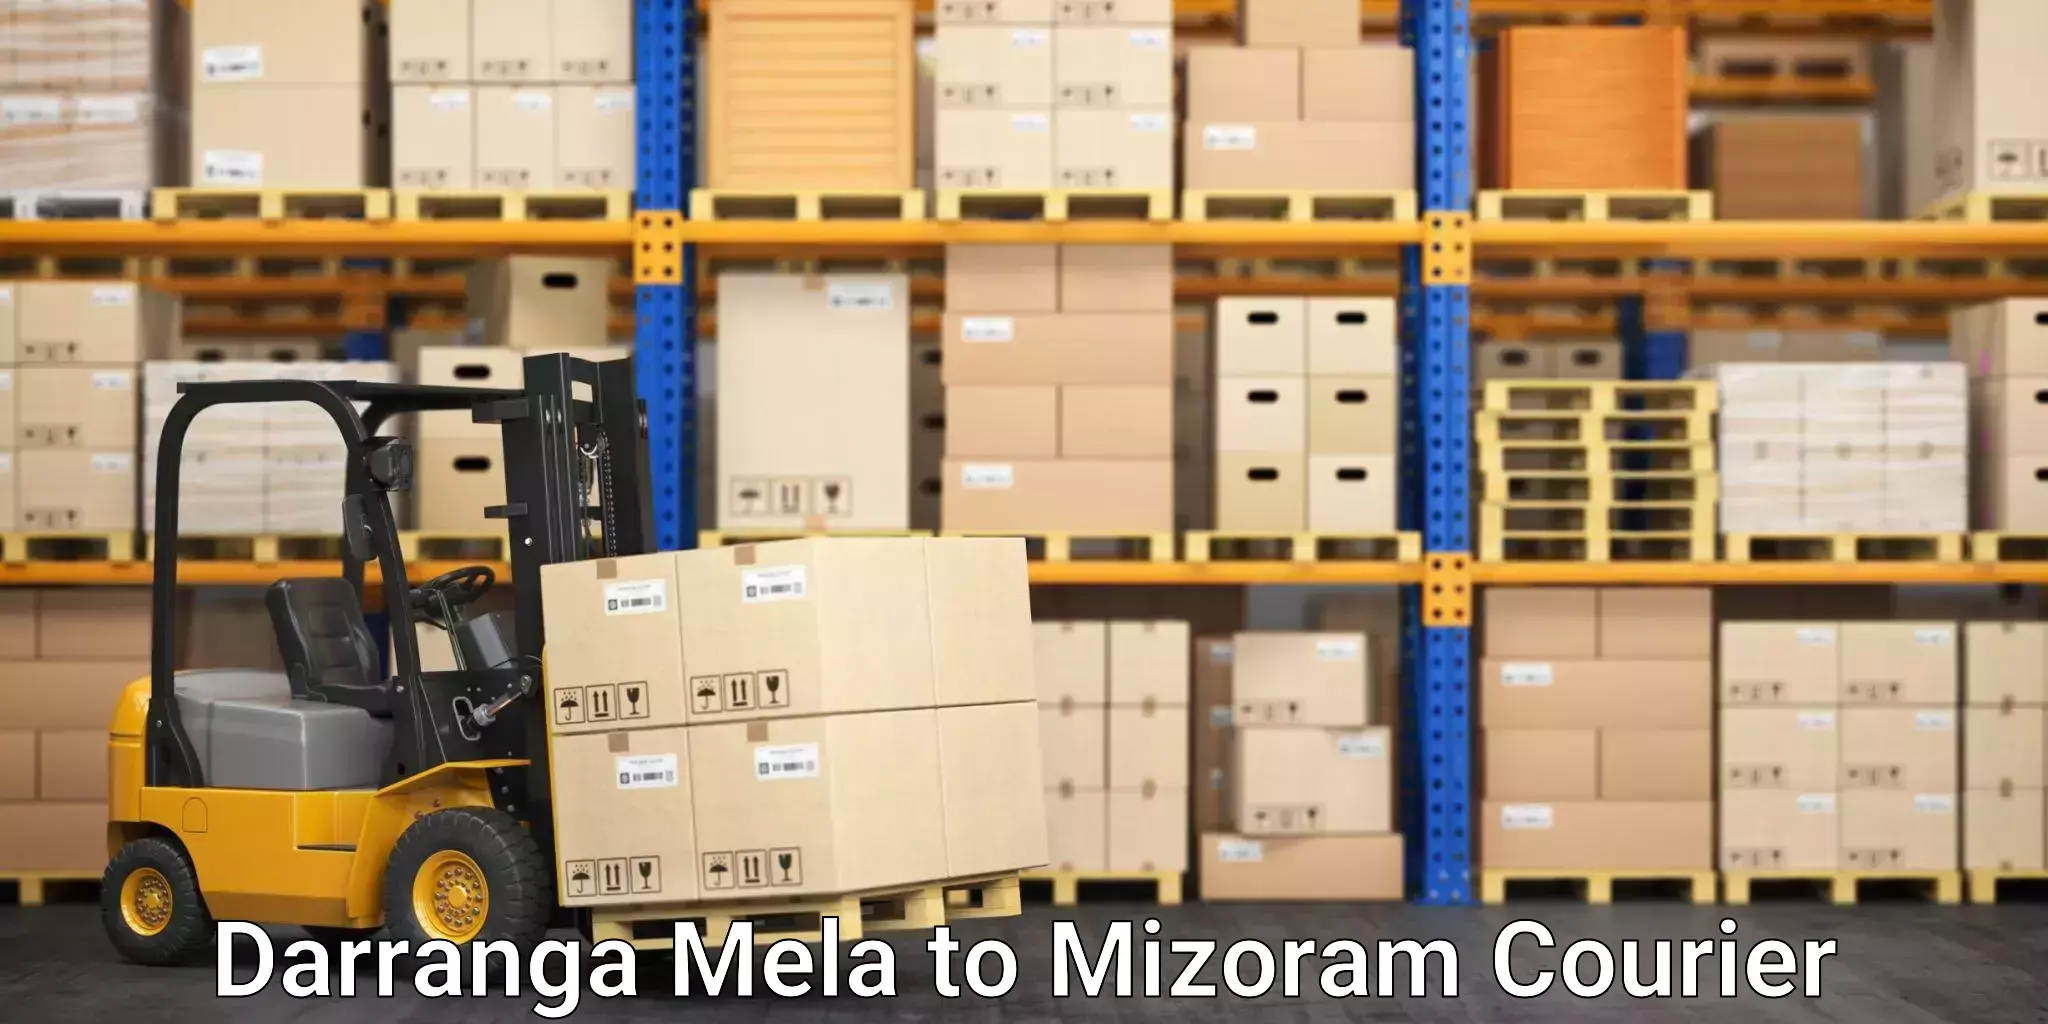 Flexible courier rates Darranga Mela to Mizoram